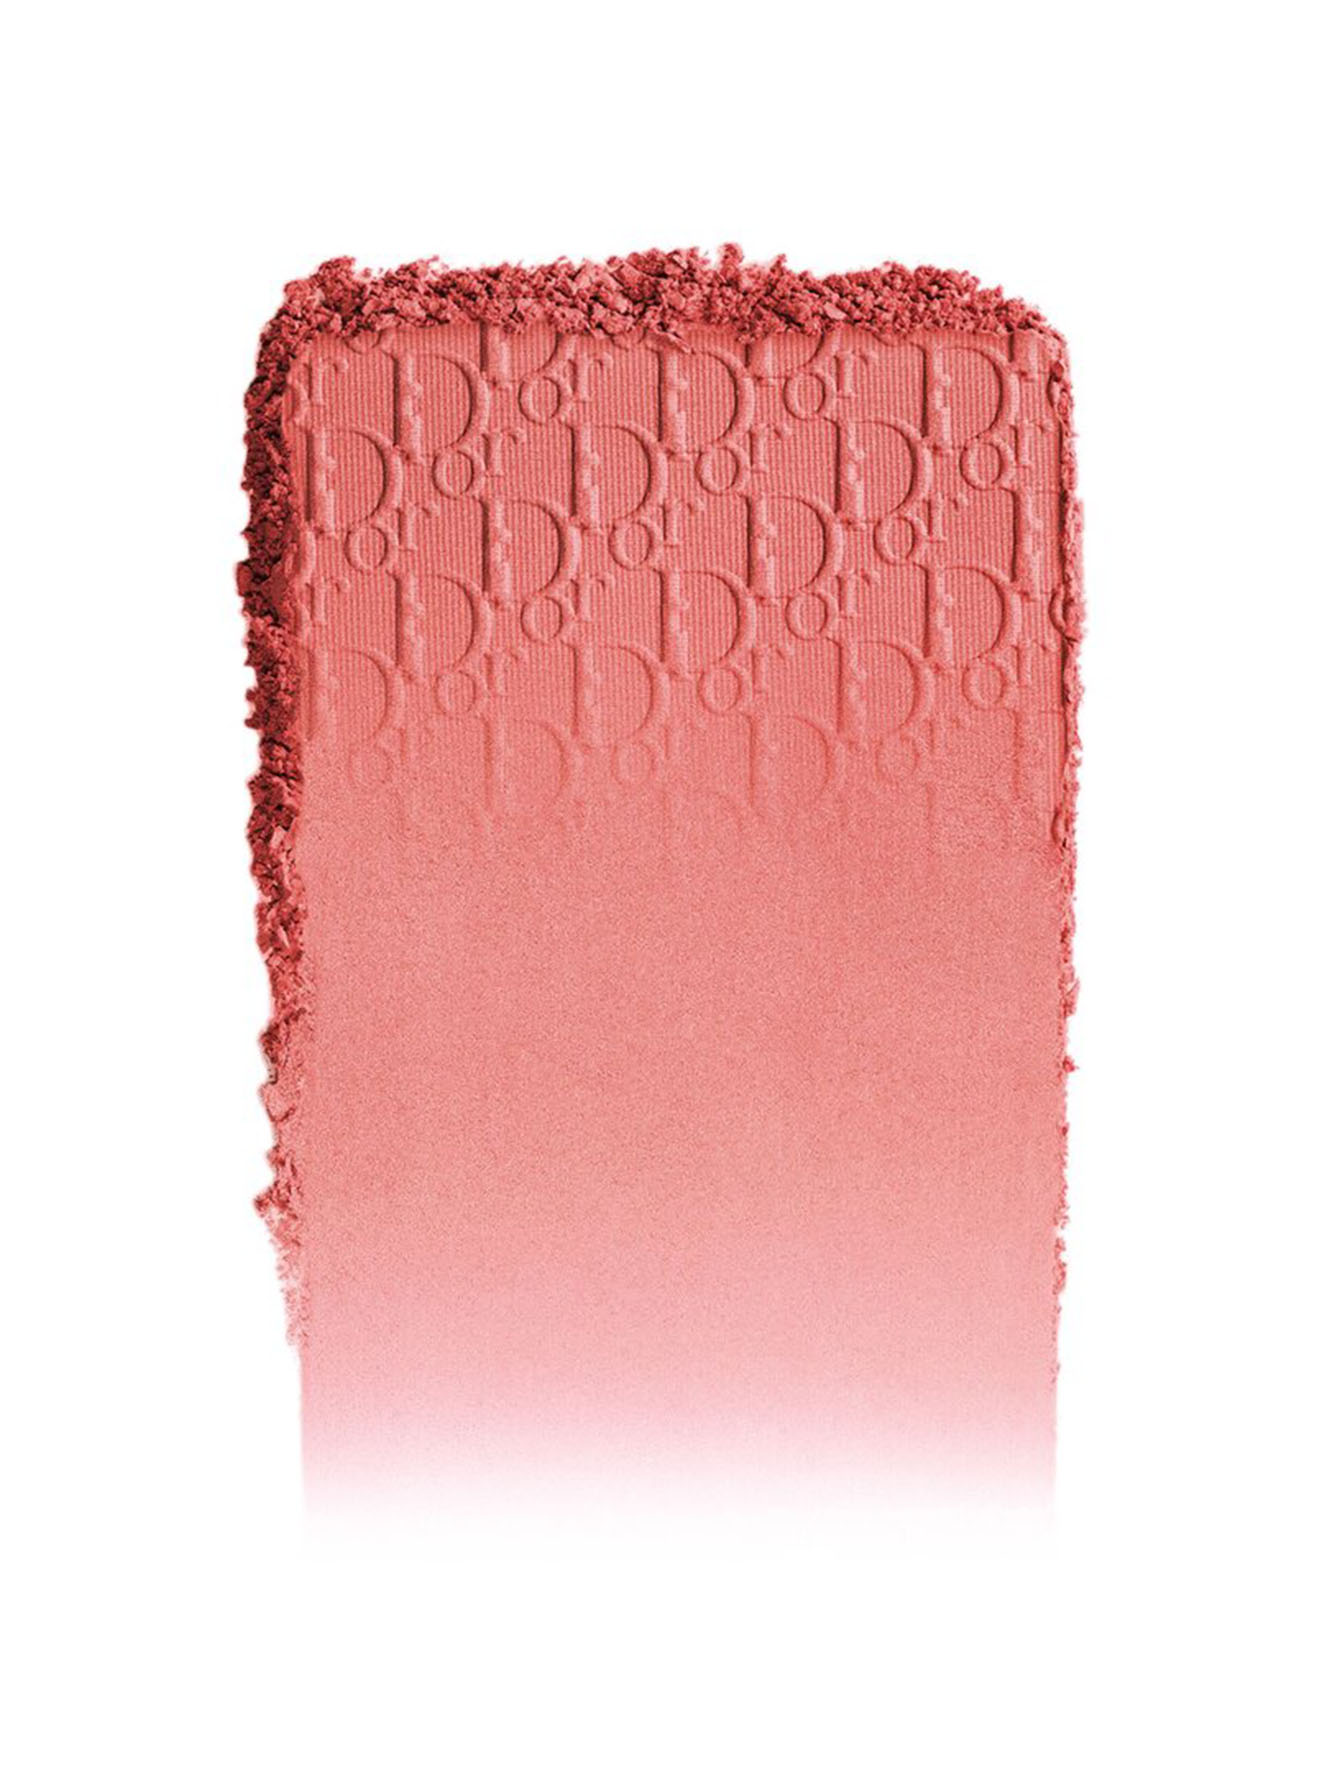 Румяна для лица Dior Backstage Rosy Glow, 012 Розовое Дерево, 4,4 г - Обтравка1